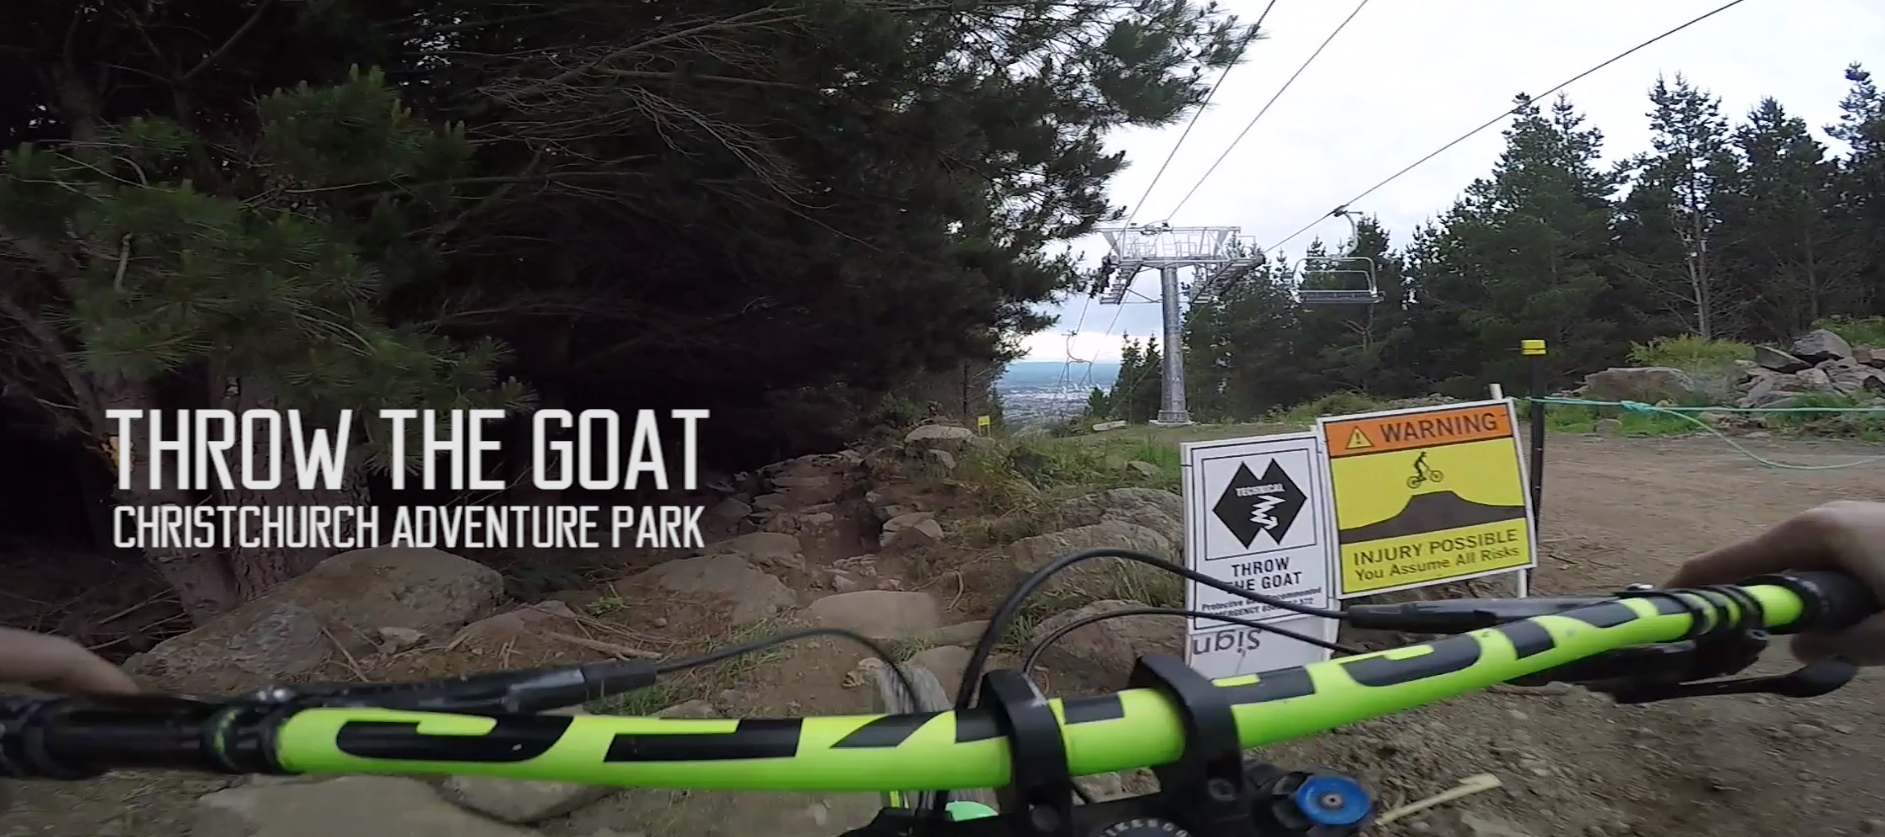 Throw The Goat, Christchurch Adventure Park – New Zealand